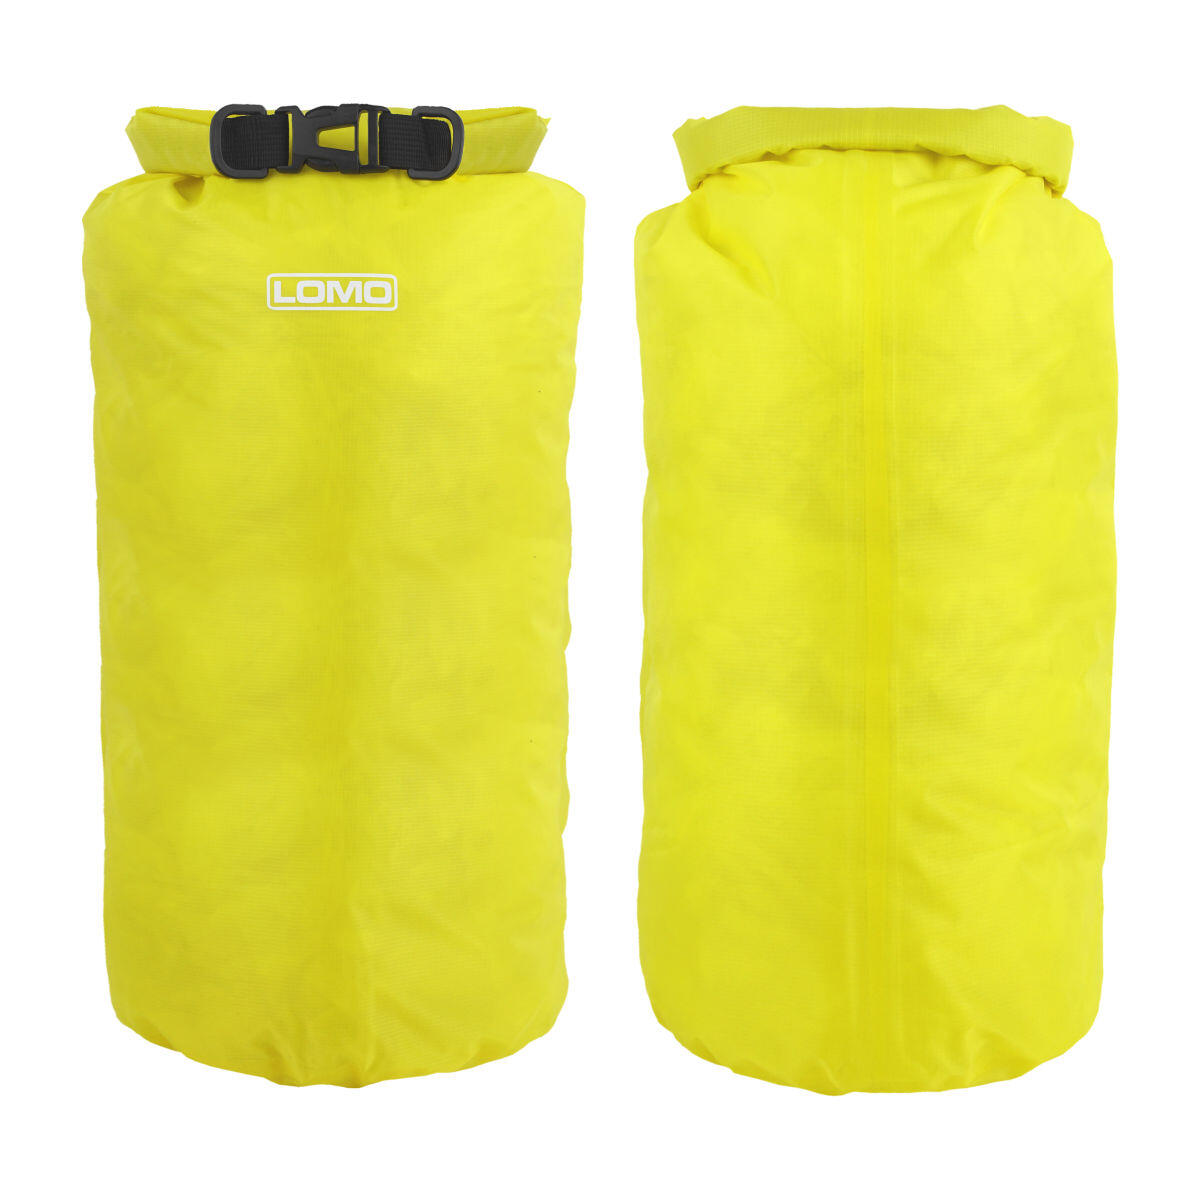 Lomo 20L TPU Dry Bag - Yellow 5/5